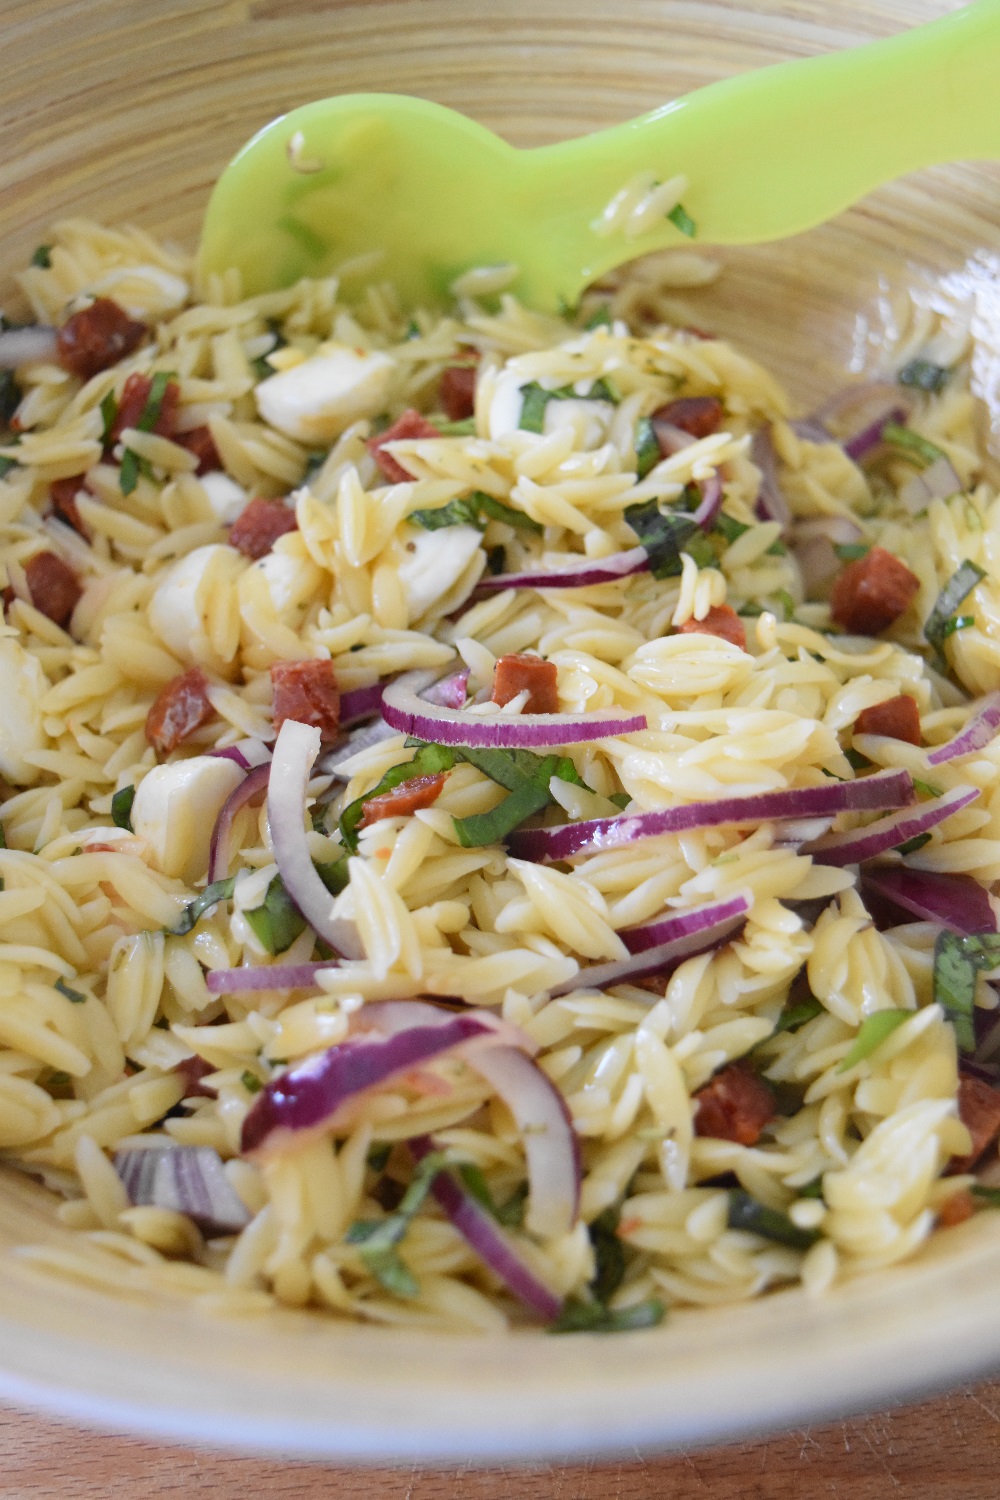 Salade d'orzo au chorizo et mozzarella - recette facile